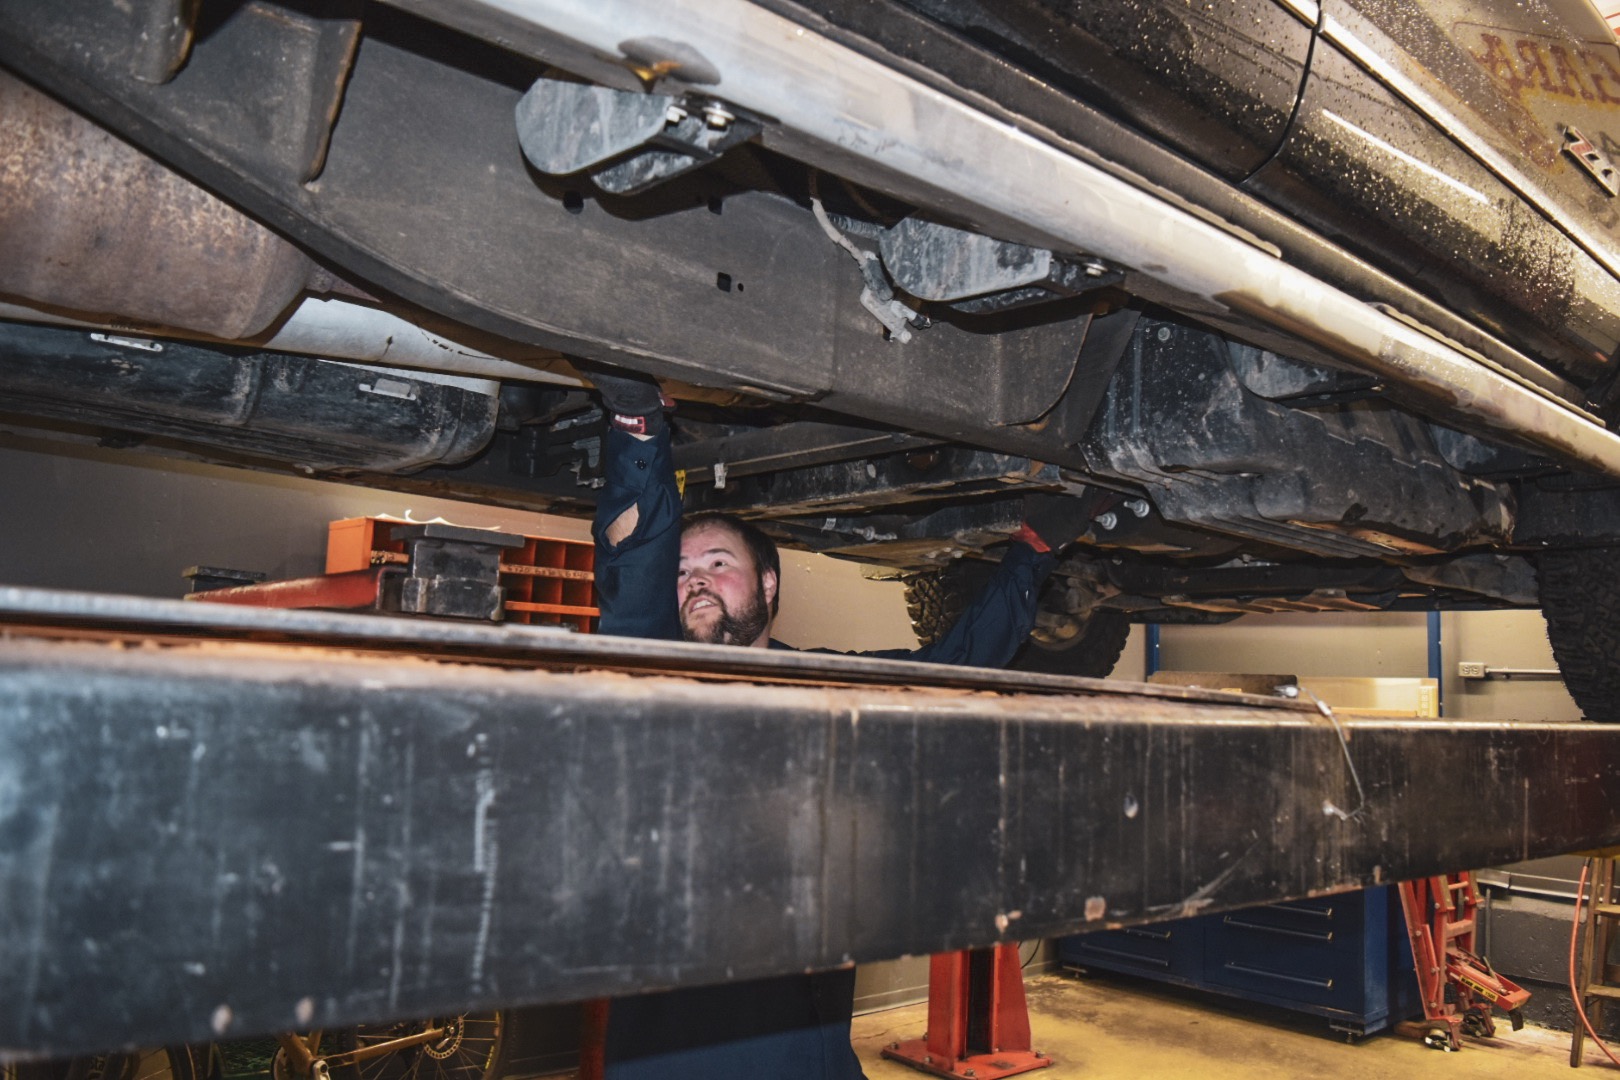 Employee performing a mechanical repair under a truck at 1st Street Garage